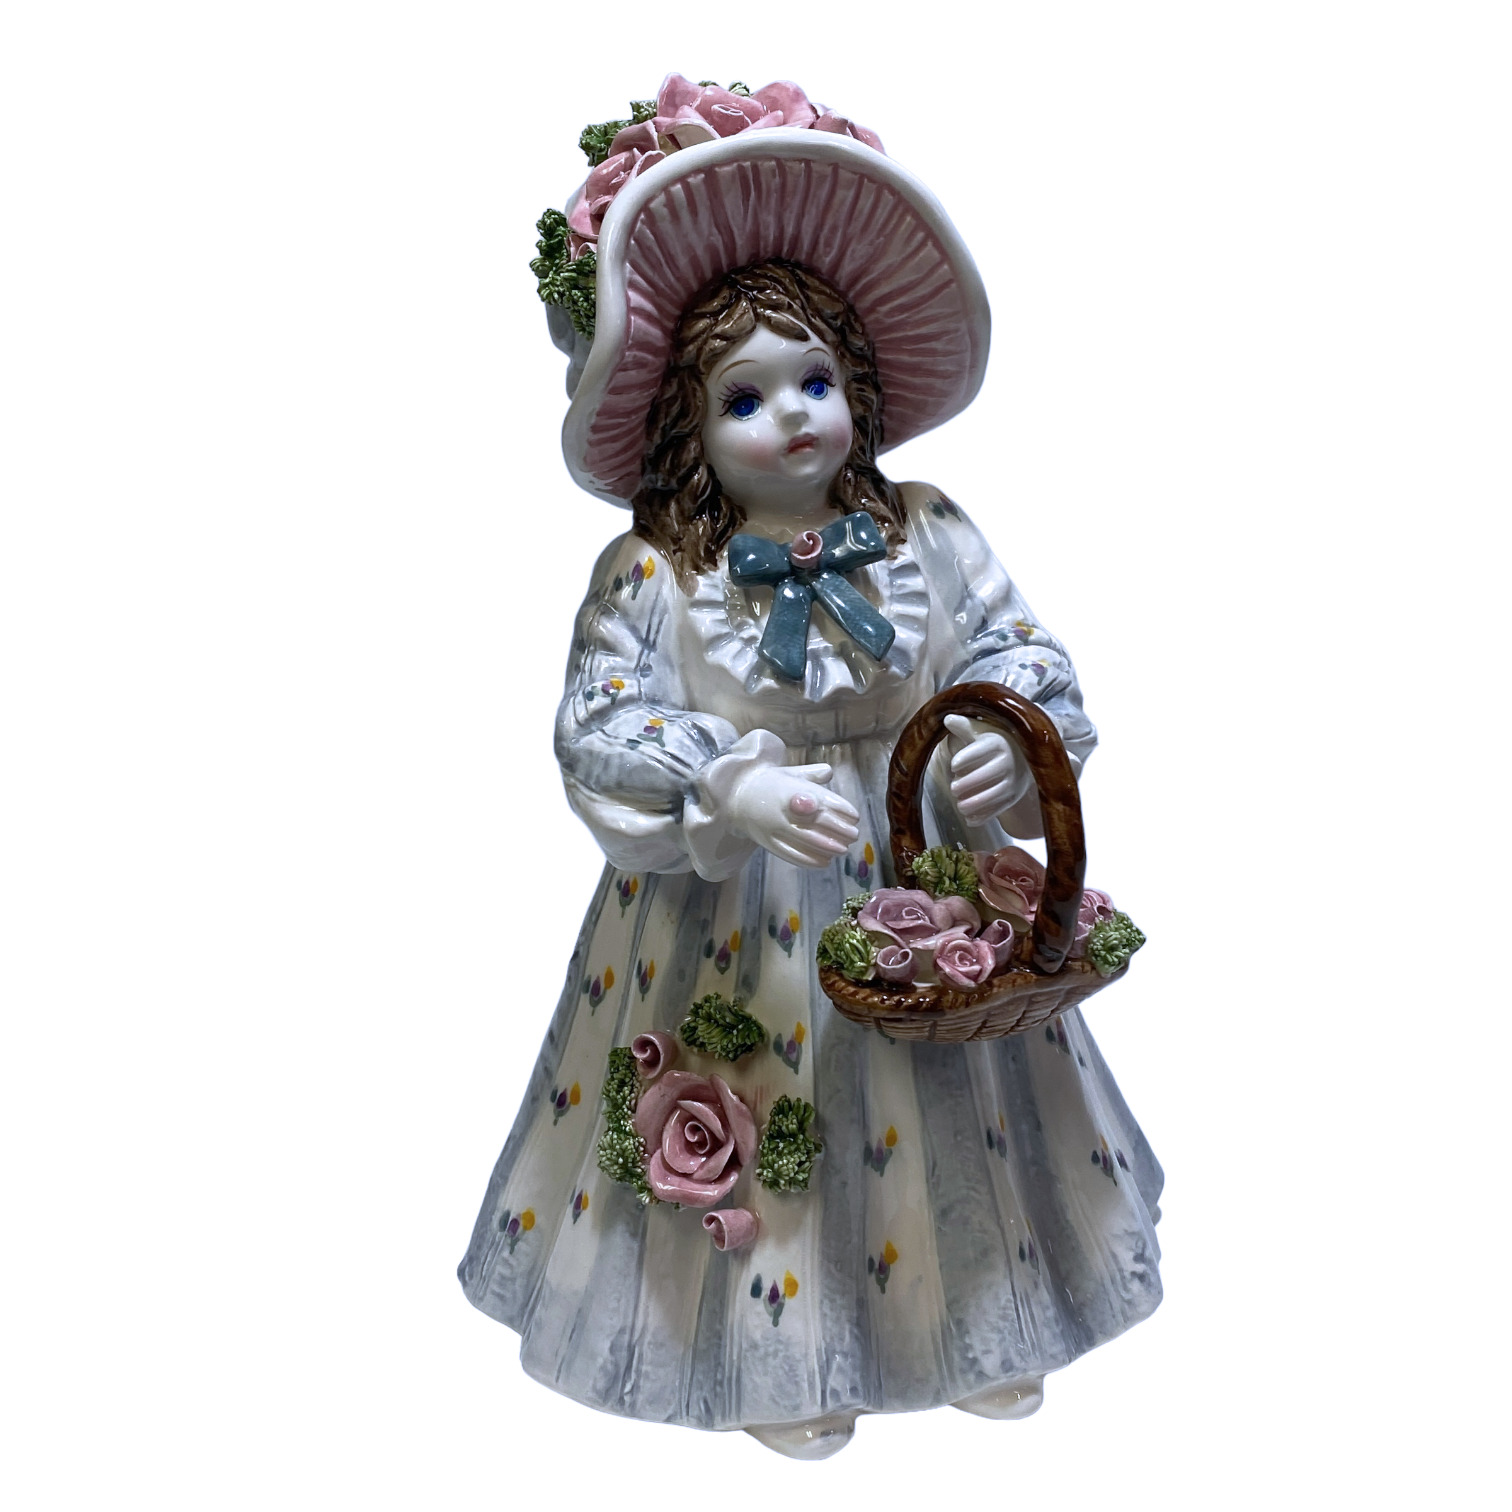 Schmid 1993 Yamada Girl Basket Rose Porcelain Music Box Figurine Signed 147/1500